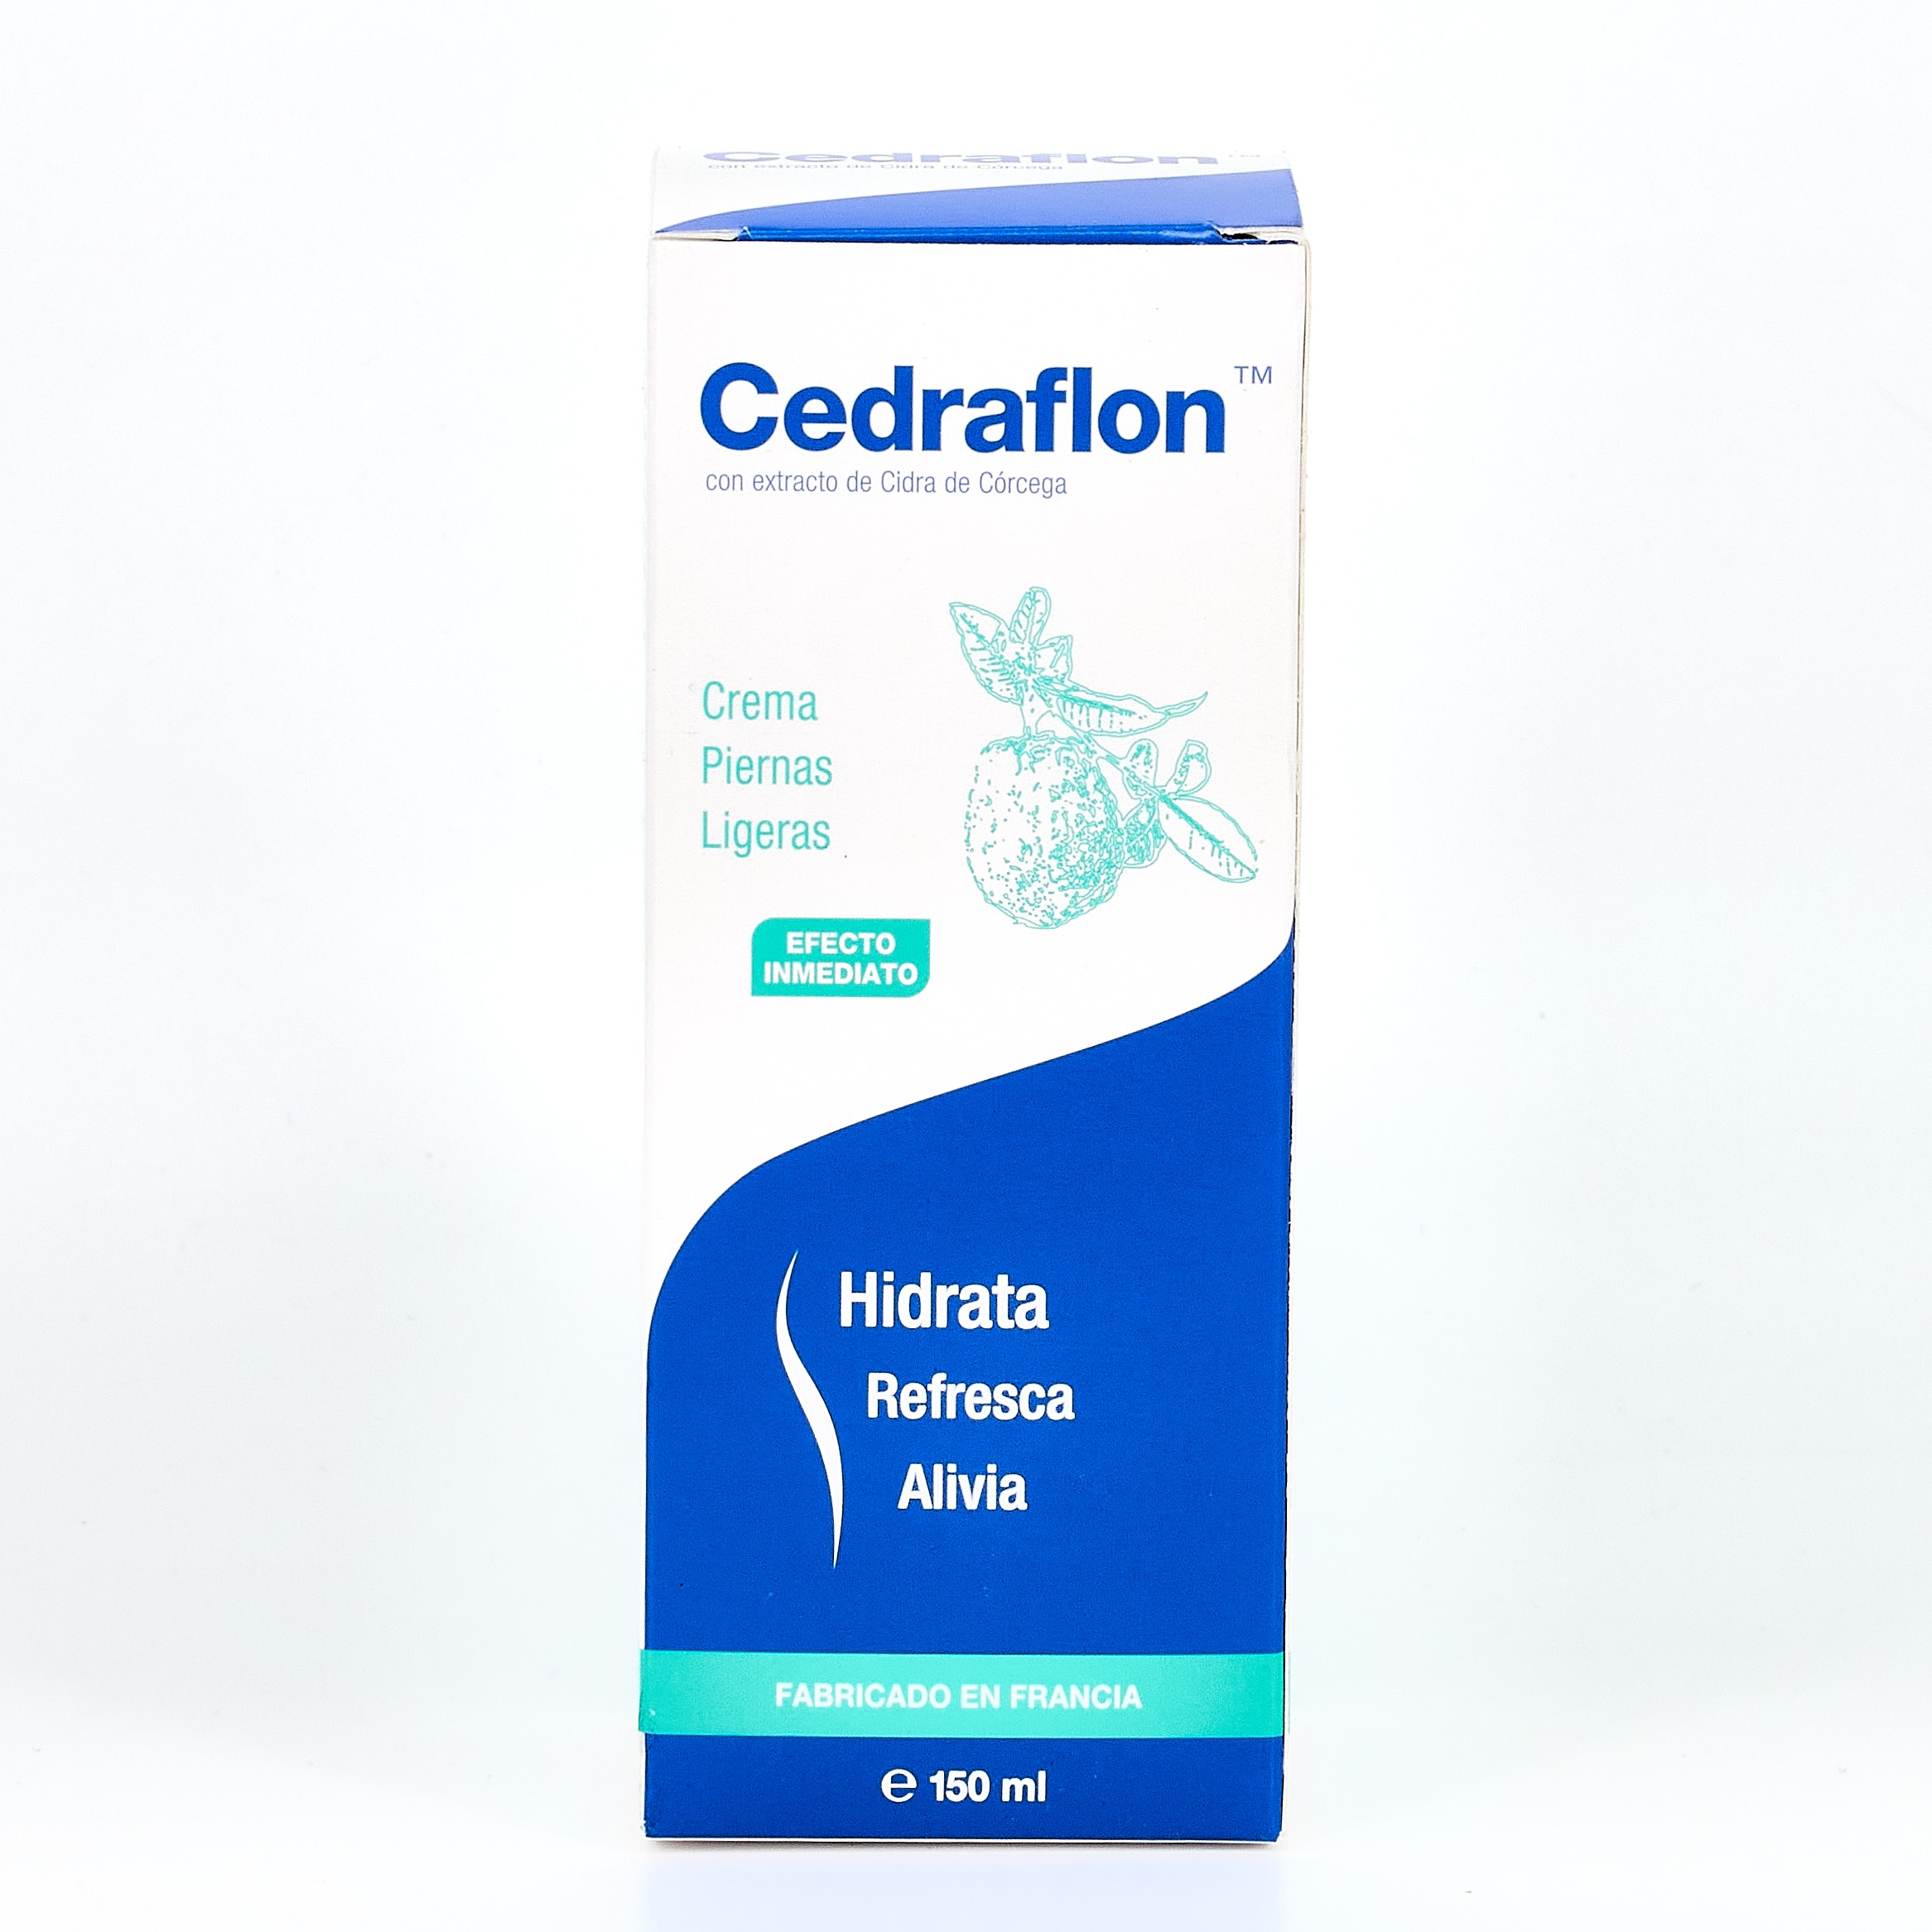 Cedraflon Light Leg Cream, 150 ml.